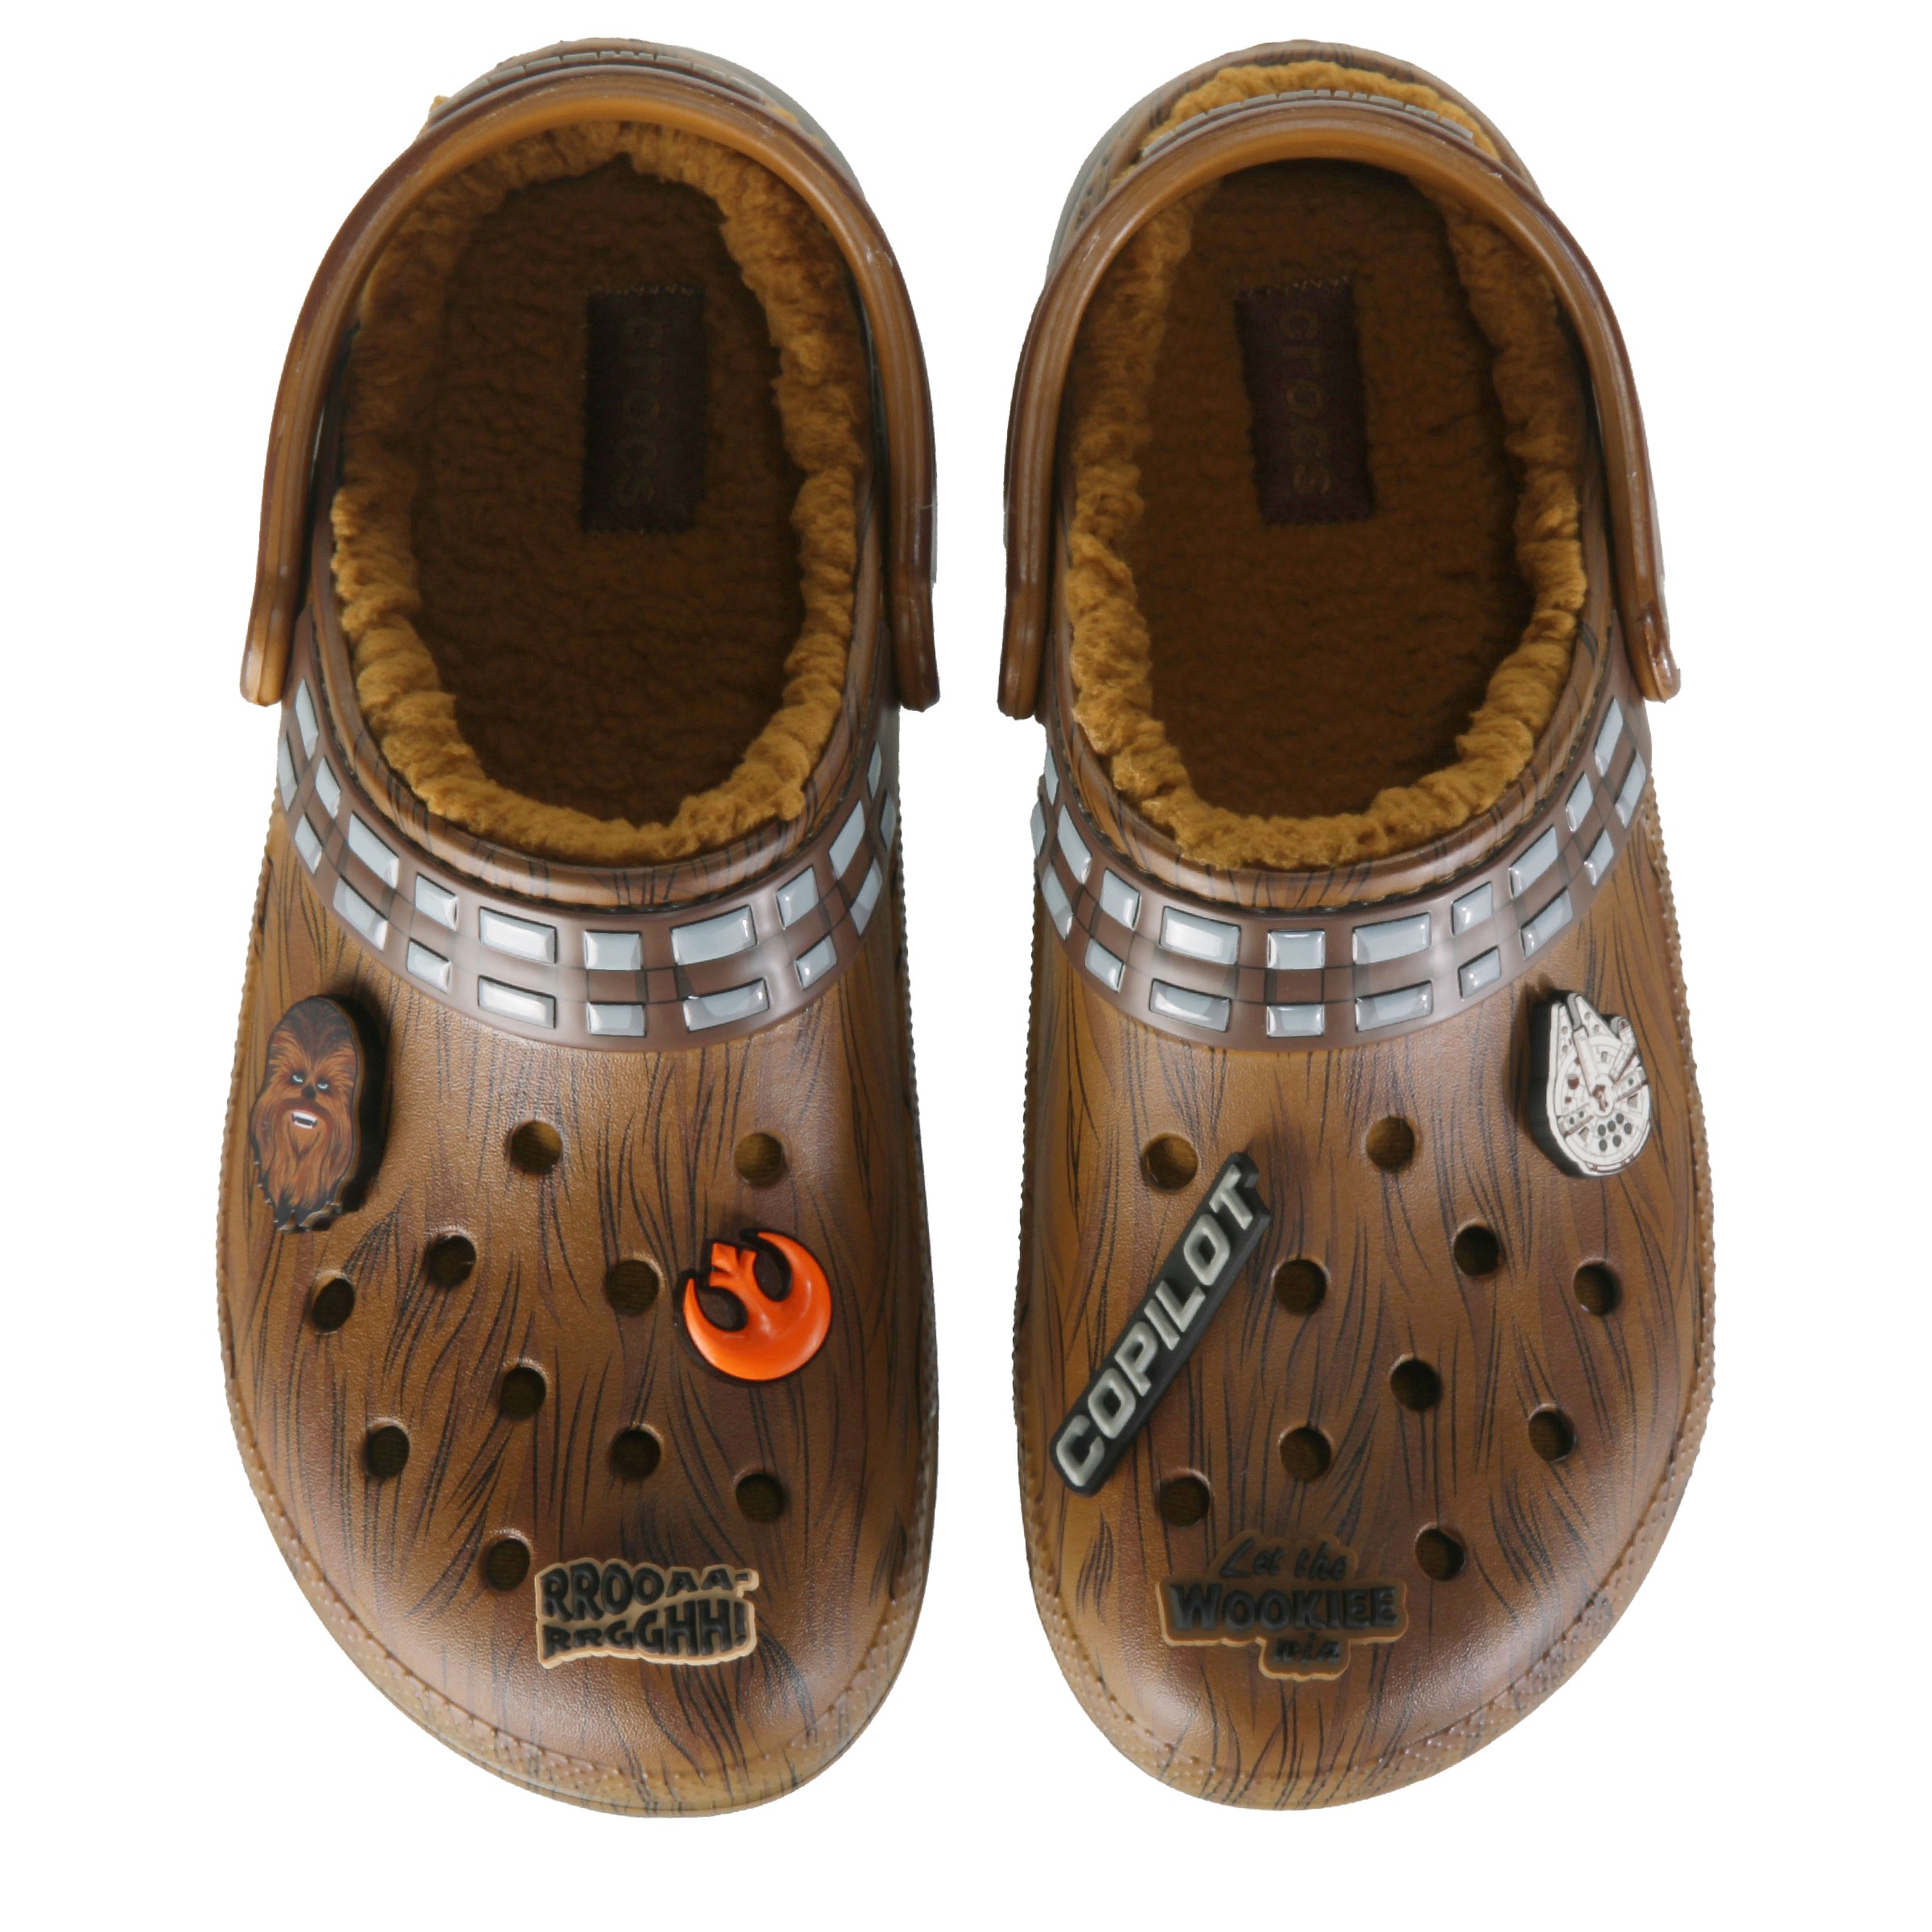 Pin by Dreaa Callahan on s h o e s  Crocs fashion, Girly shoes, Crocs shoes